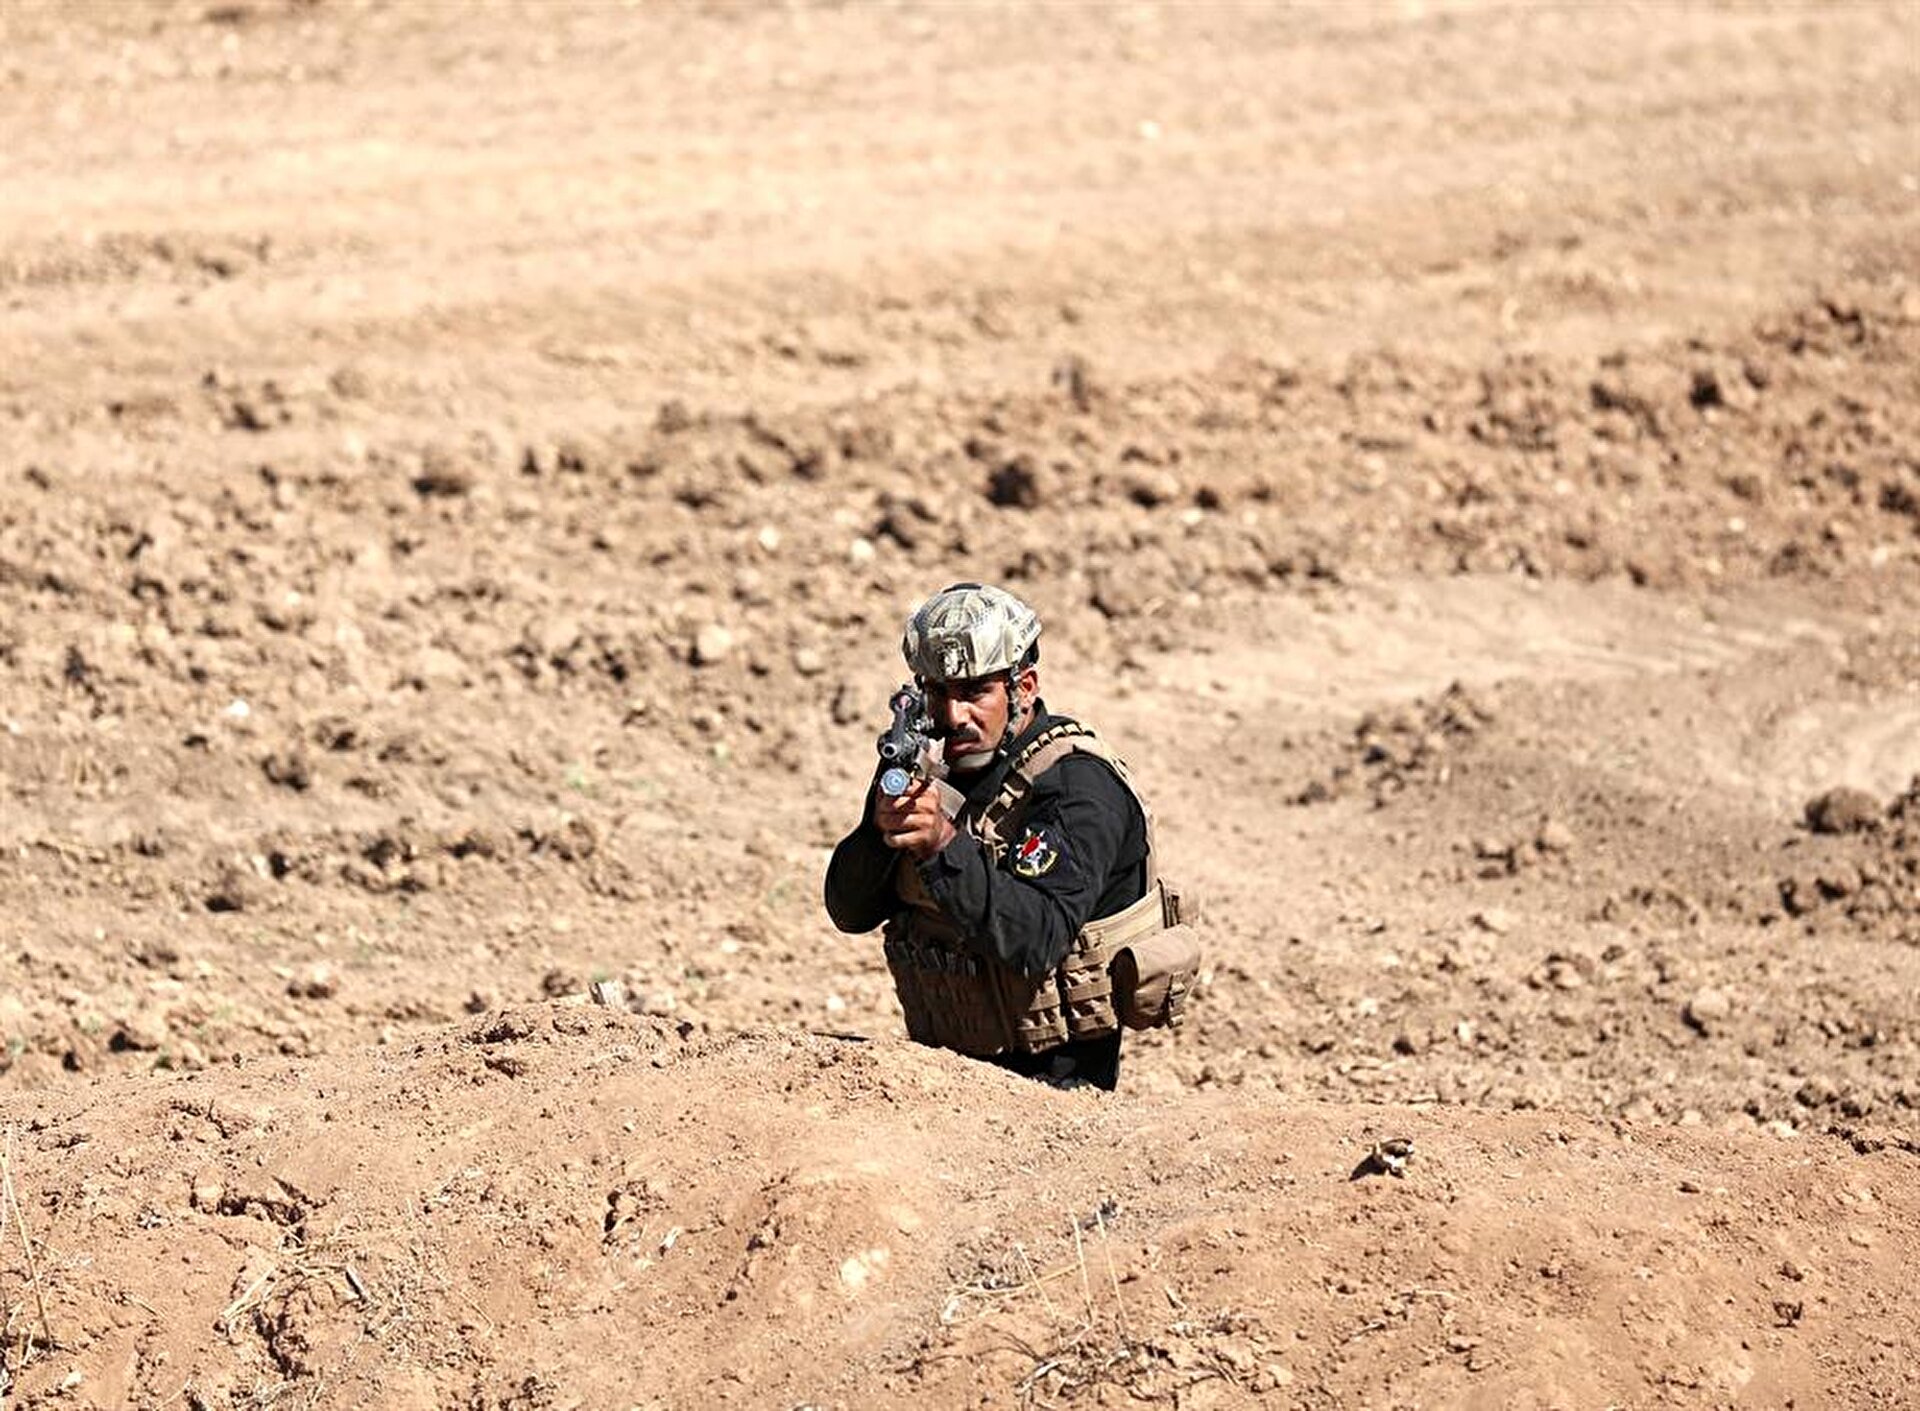 Turkey continues military drills with Iraqi army near border